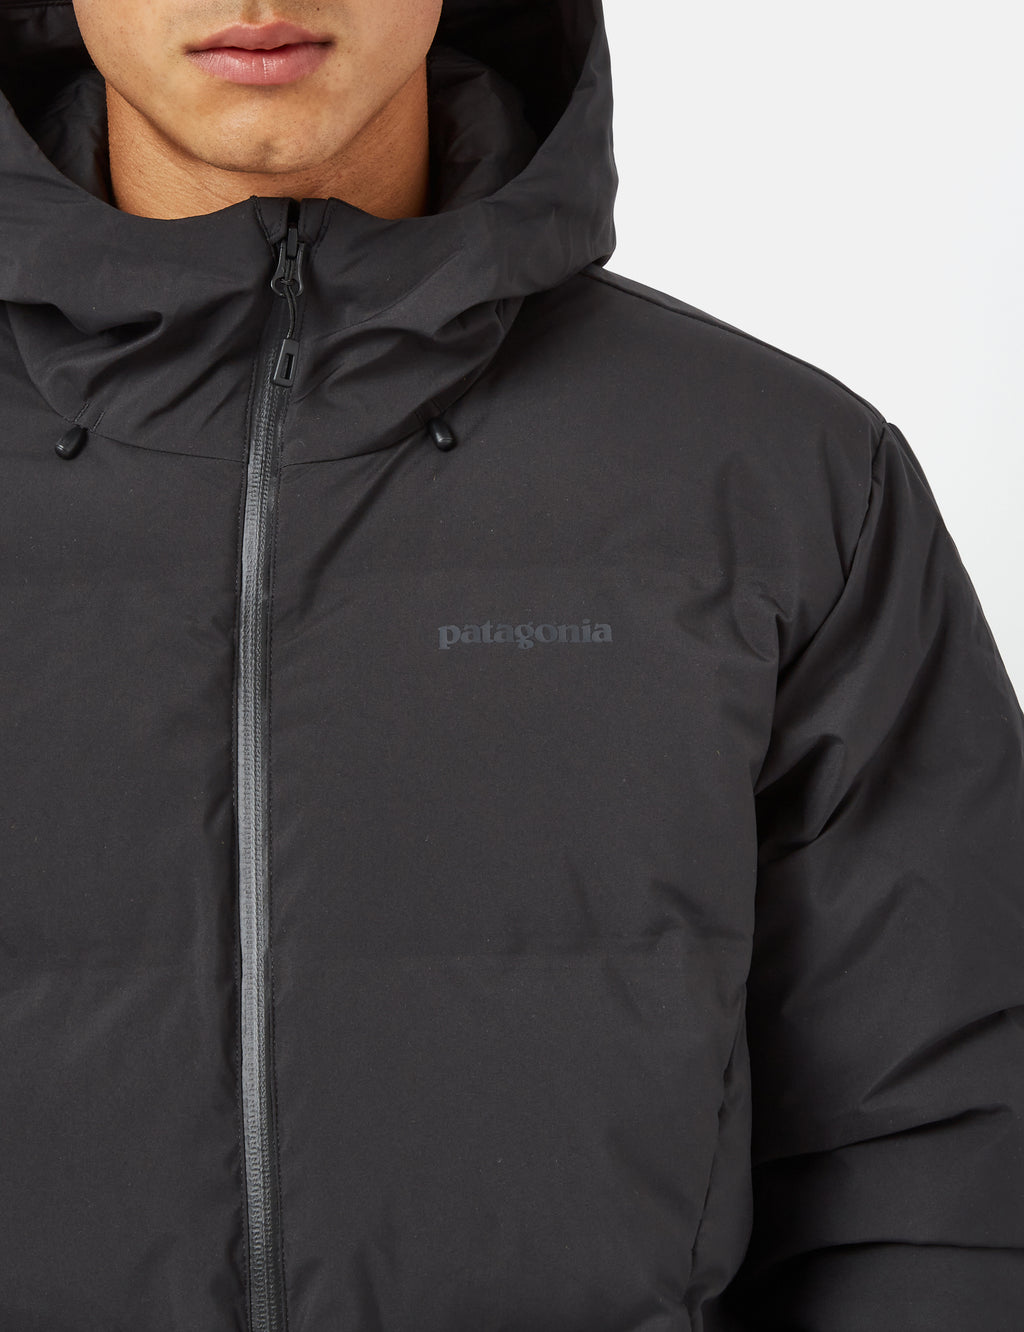 Patagonia Jackson Glacier Jacket - Black I Urban Excess. – URBAN EXCESS